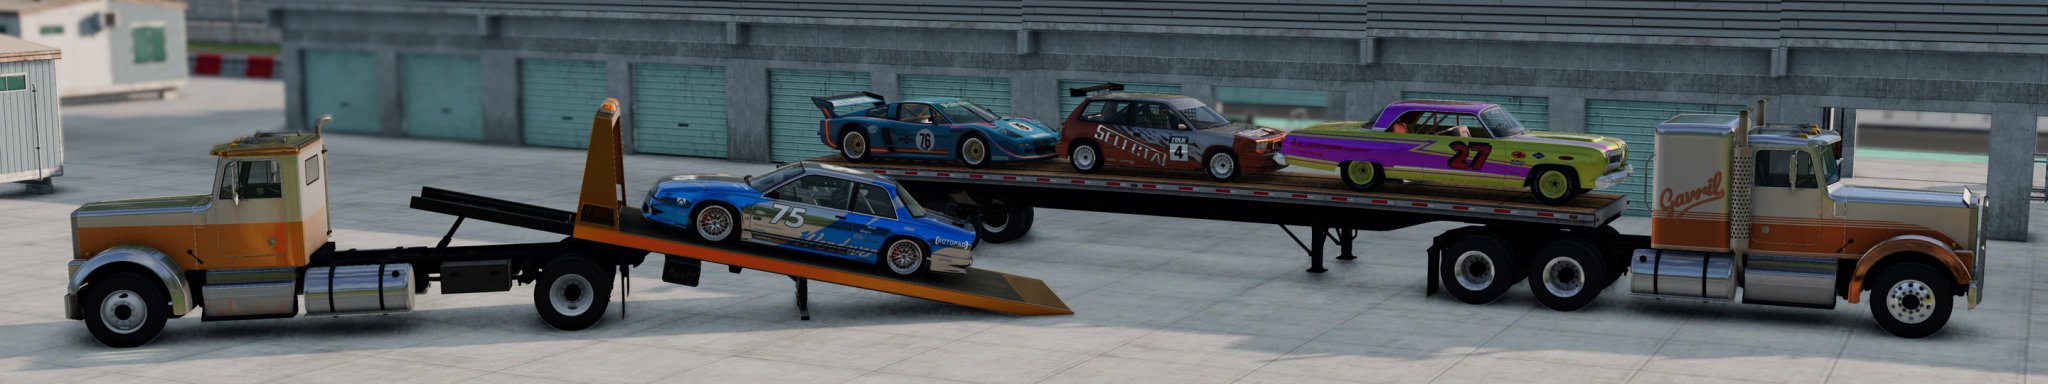 1 BeamNG 2 TRUCKS with RACE CARS copy.jpg